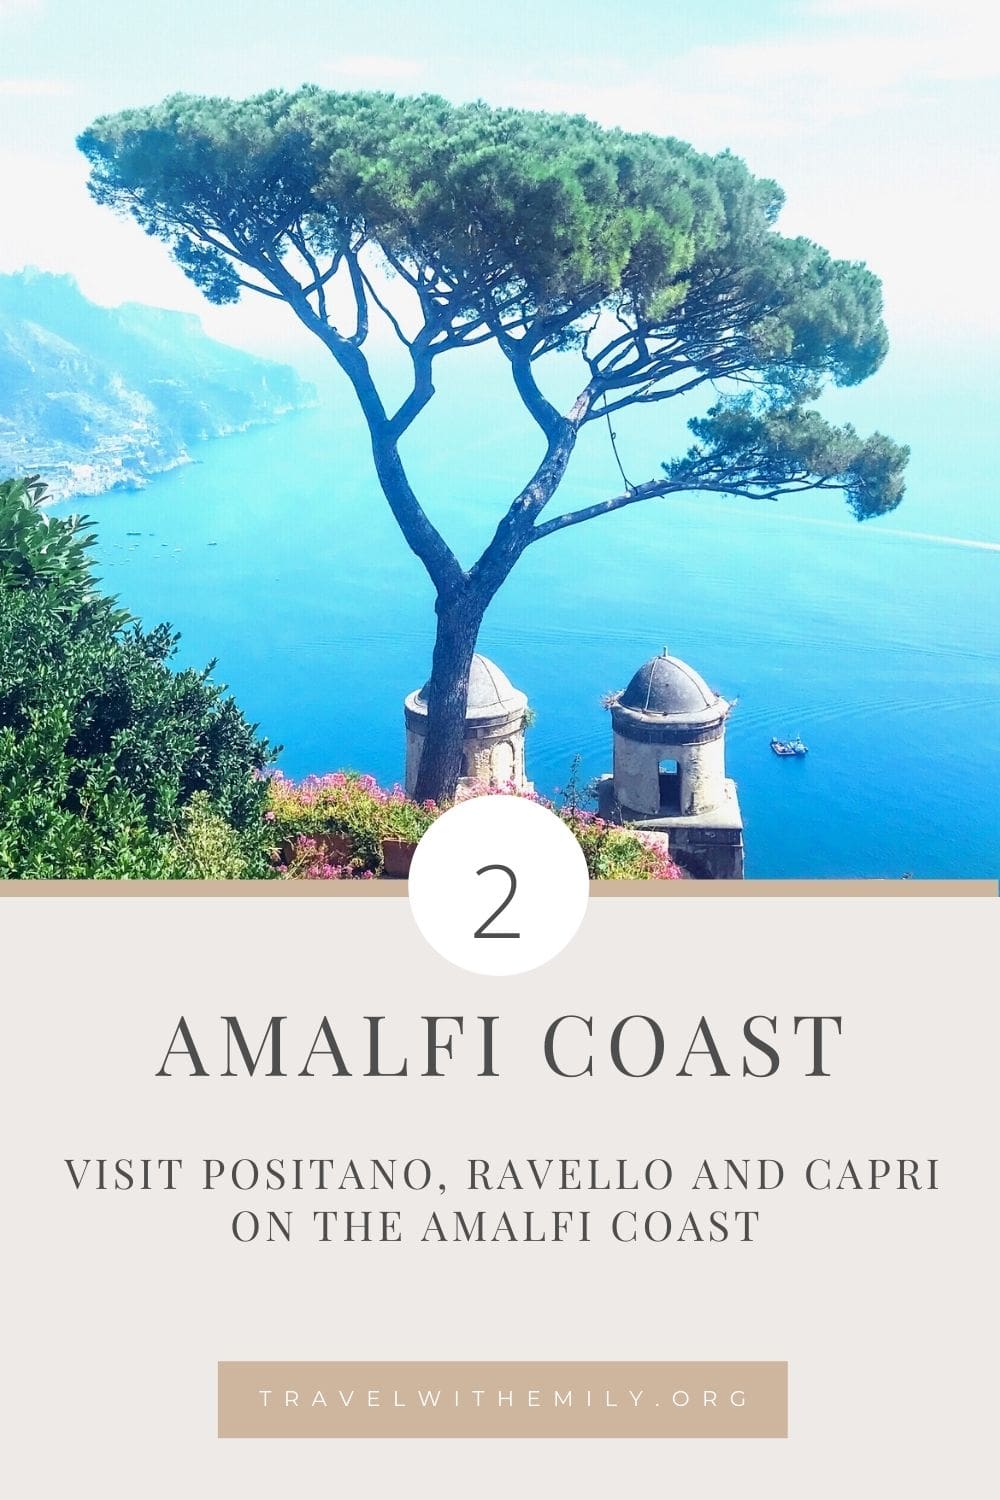 luxury beach holiday - Amalfi Coast